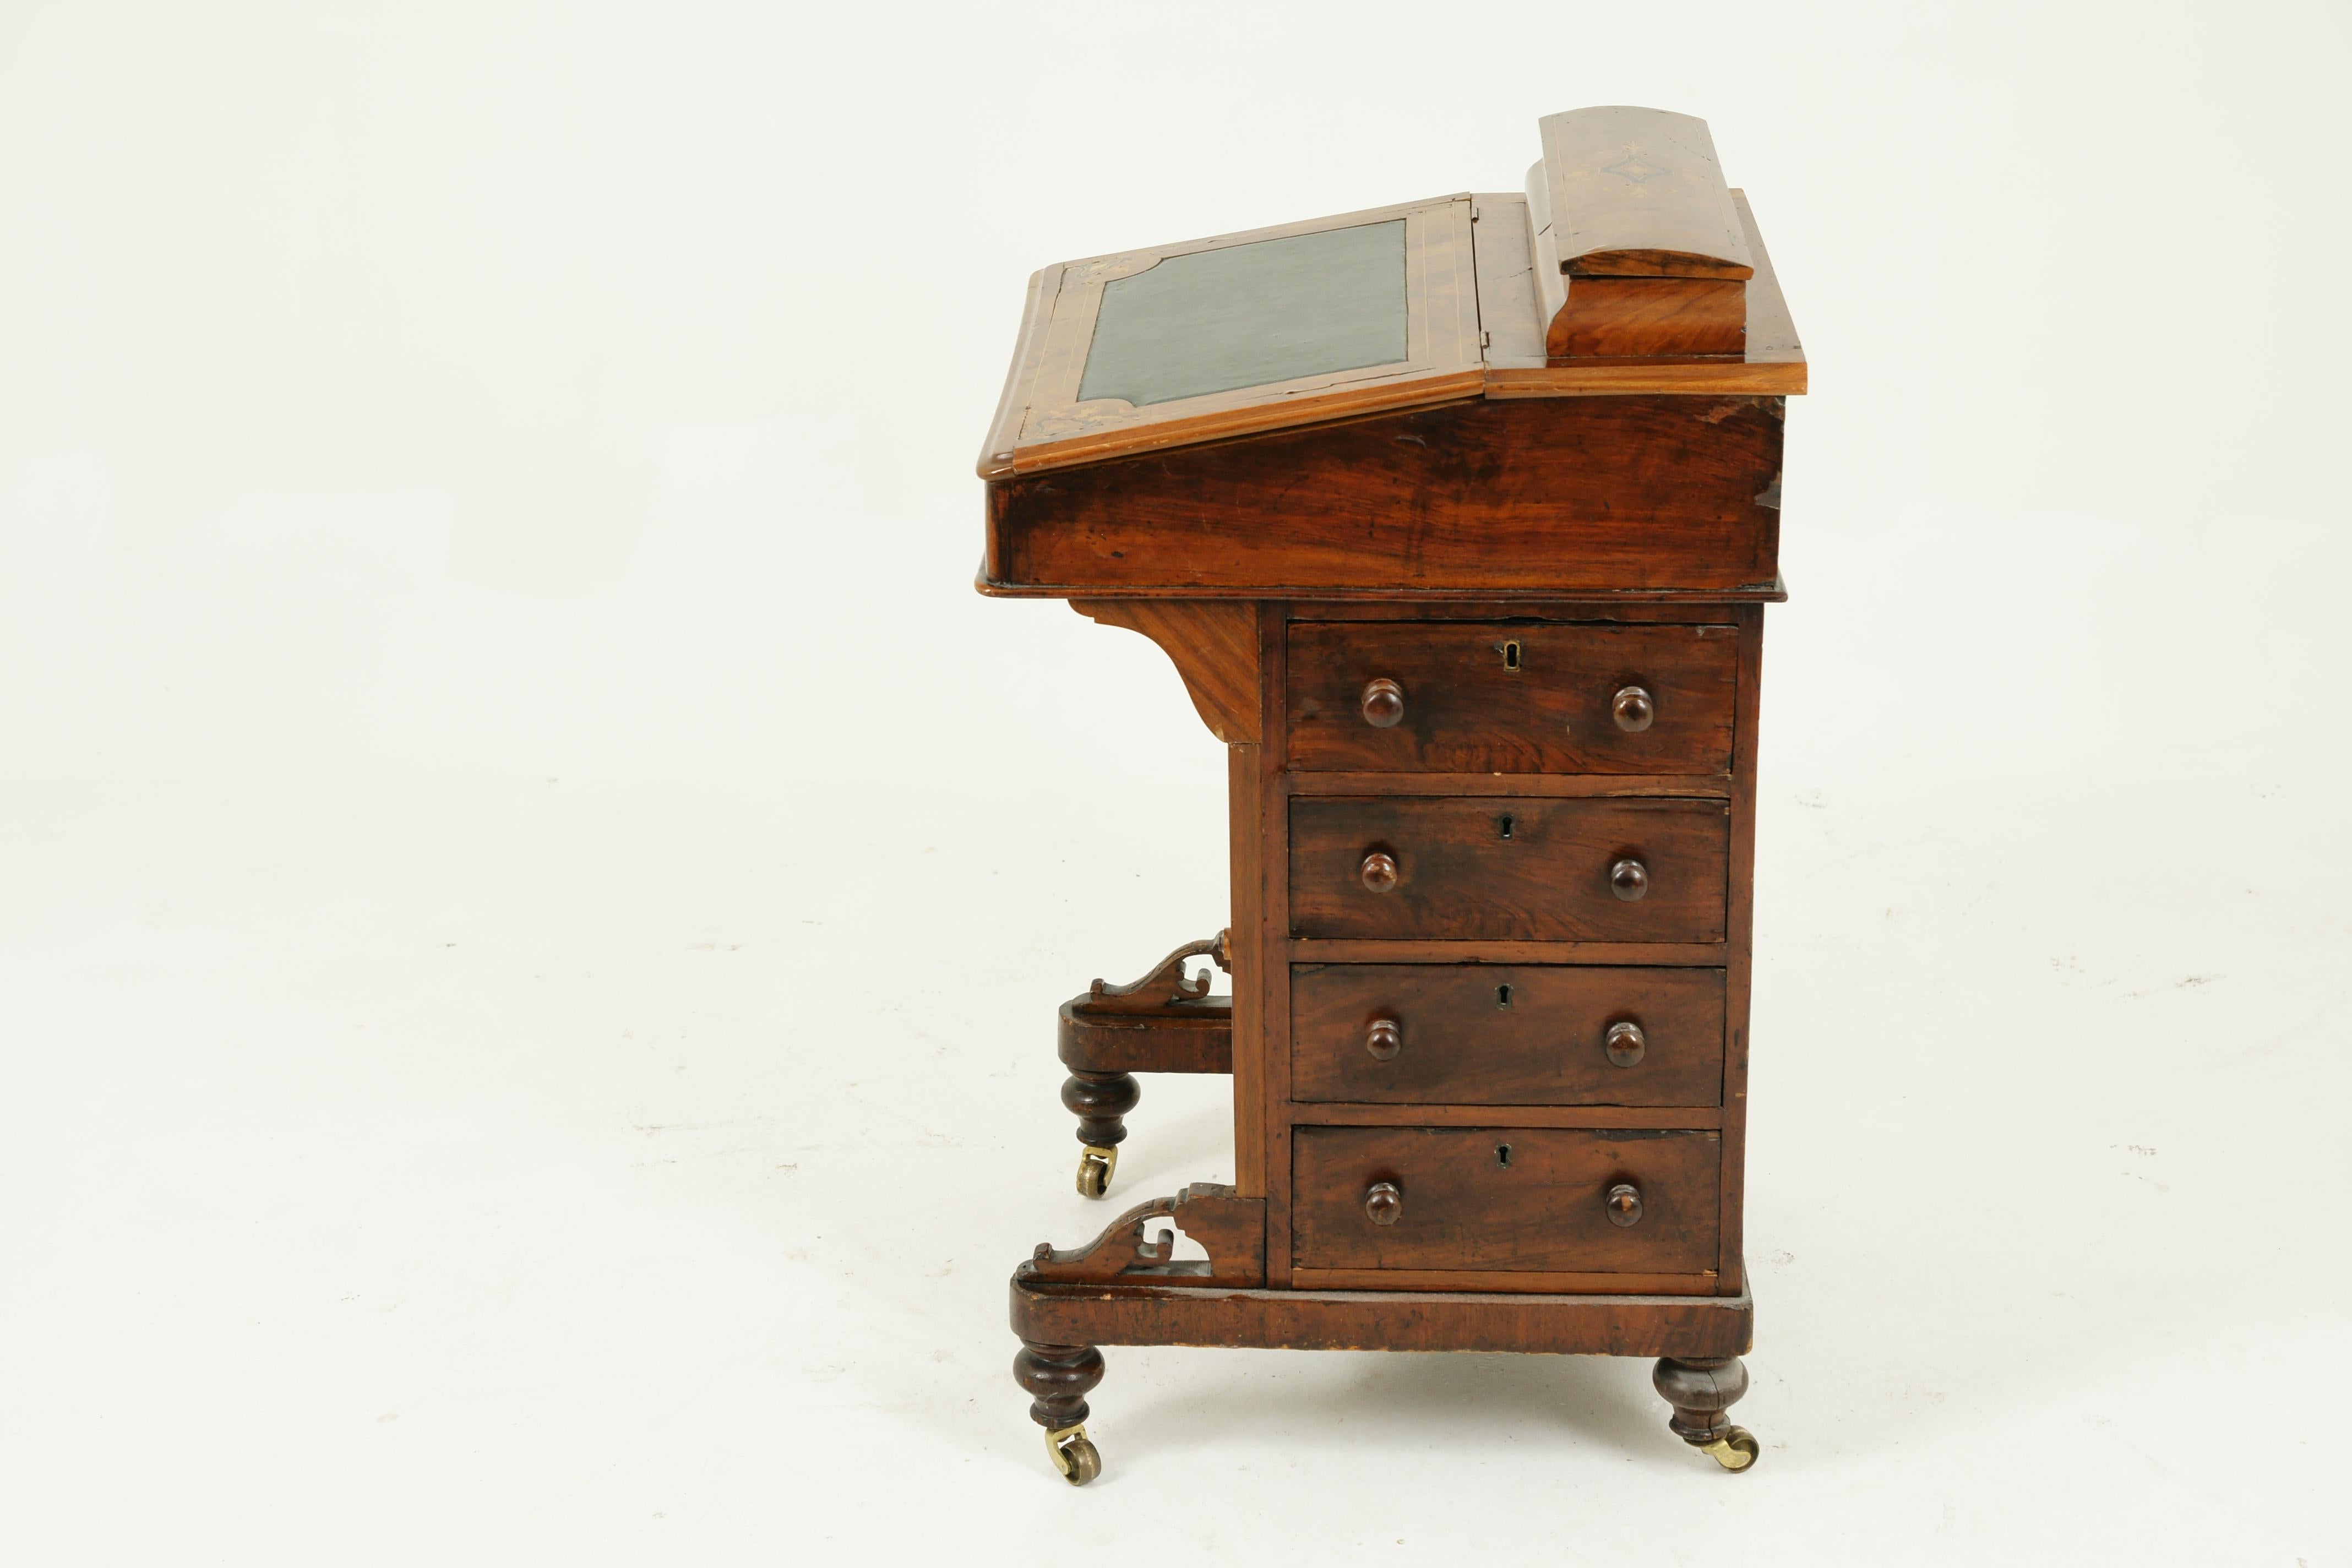 Hand-Crafted Antique Davenport Desk, Inlaid Burr Walnut Desk, Writing Desk, Victorian, B1557